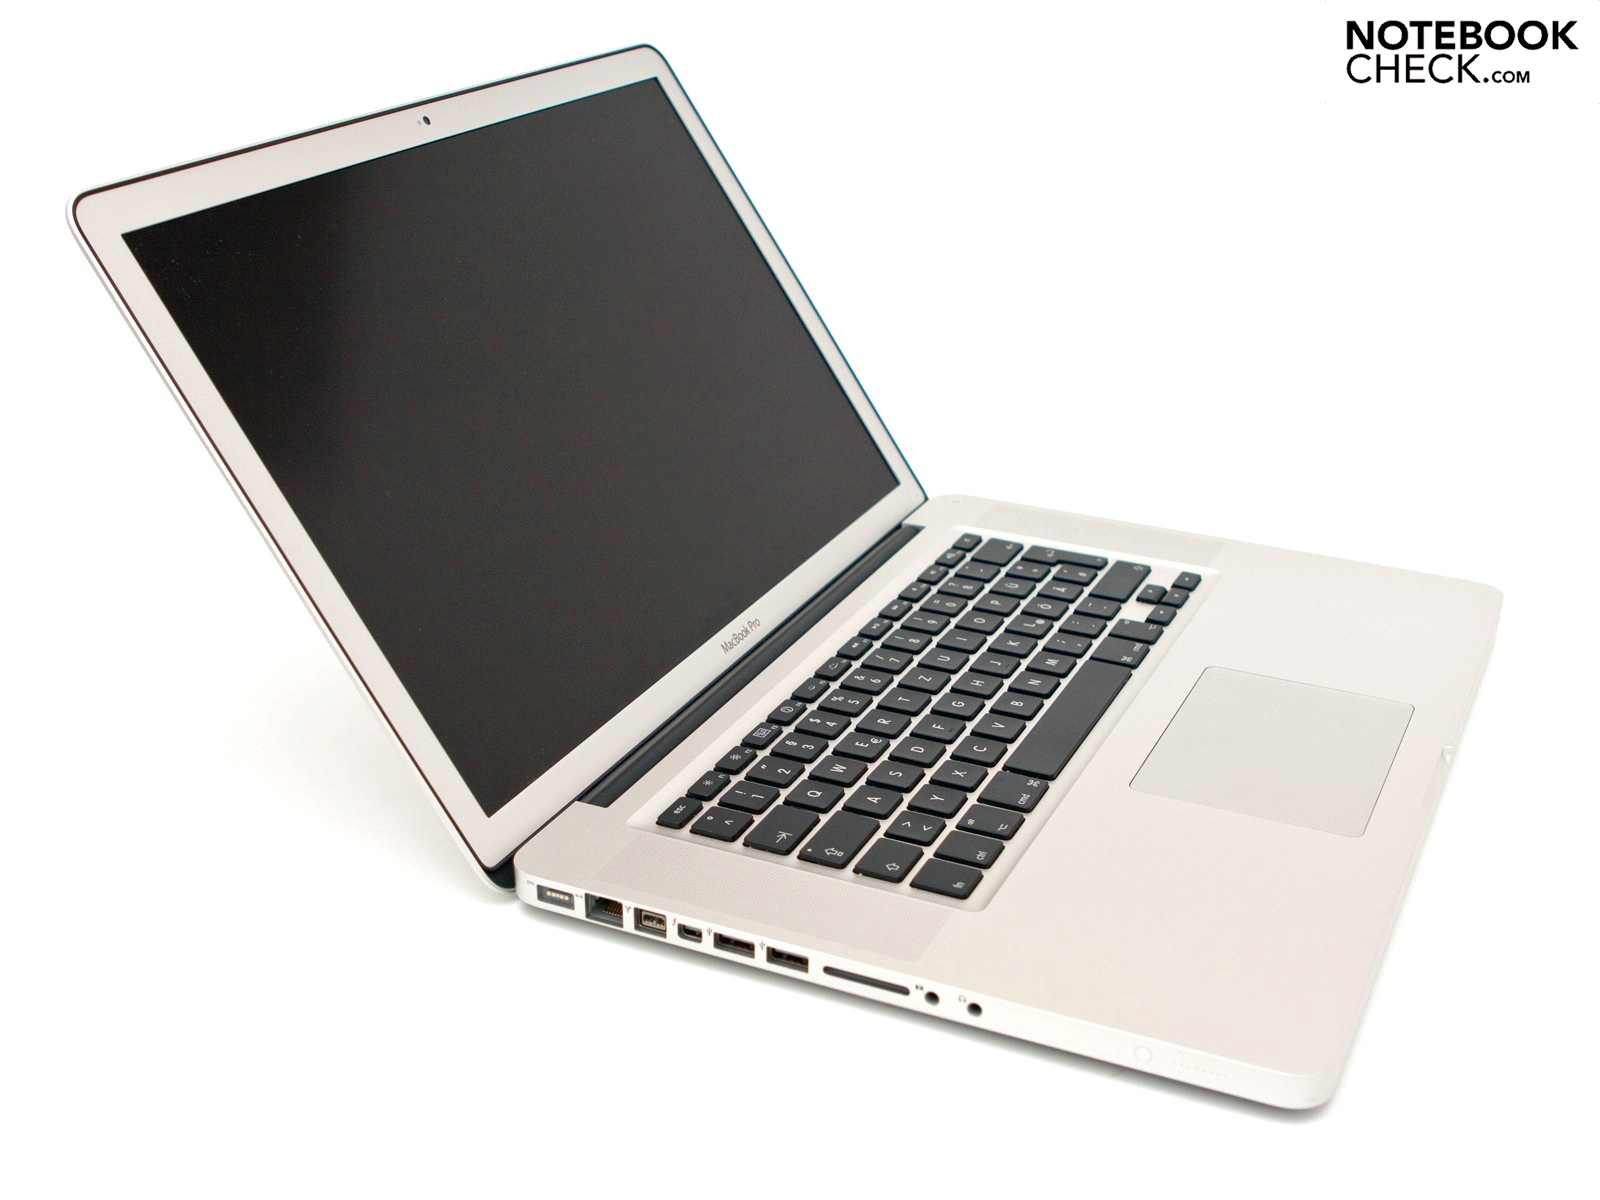 MacBook Pro 15インチ Late 2011